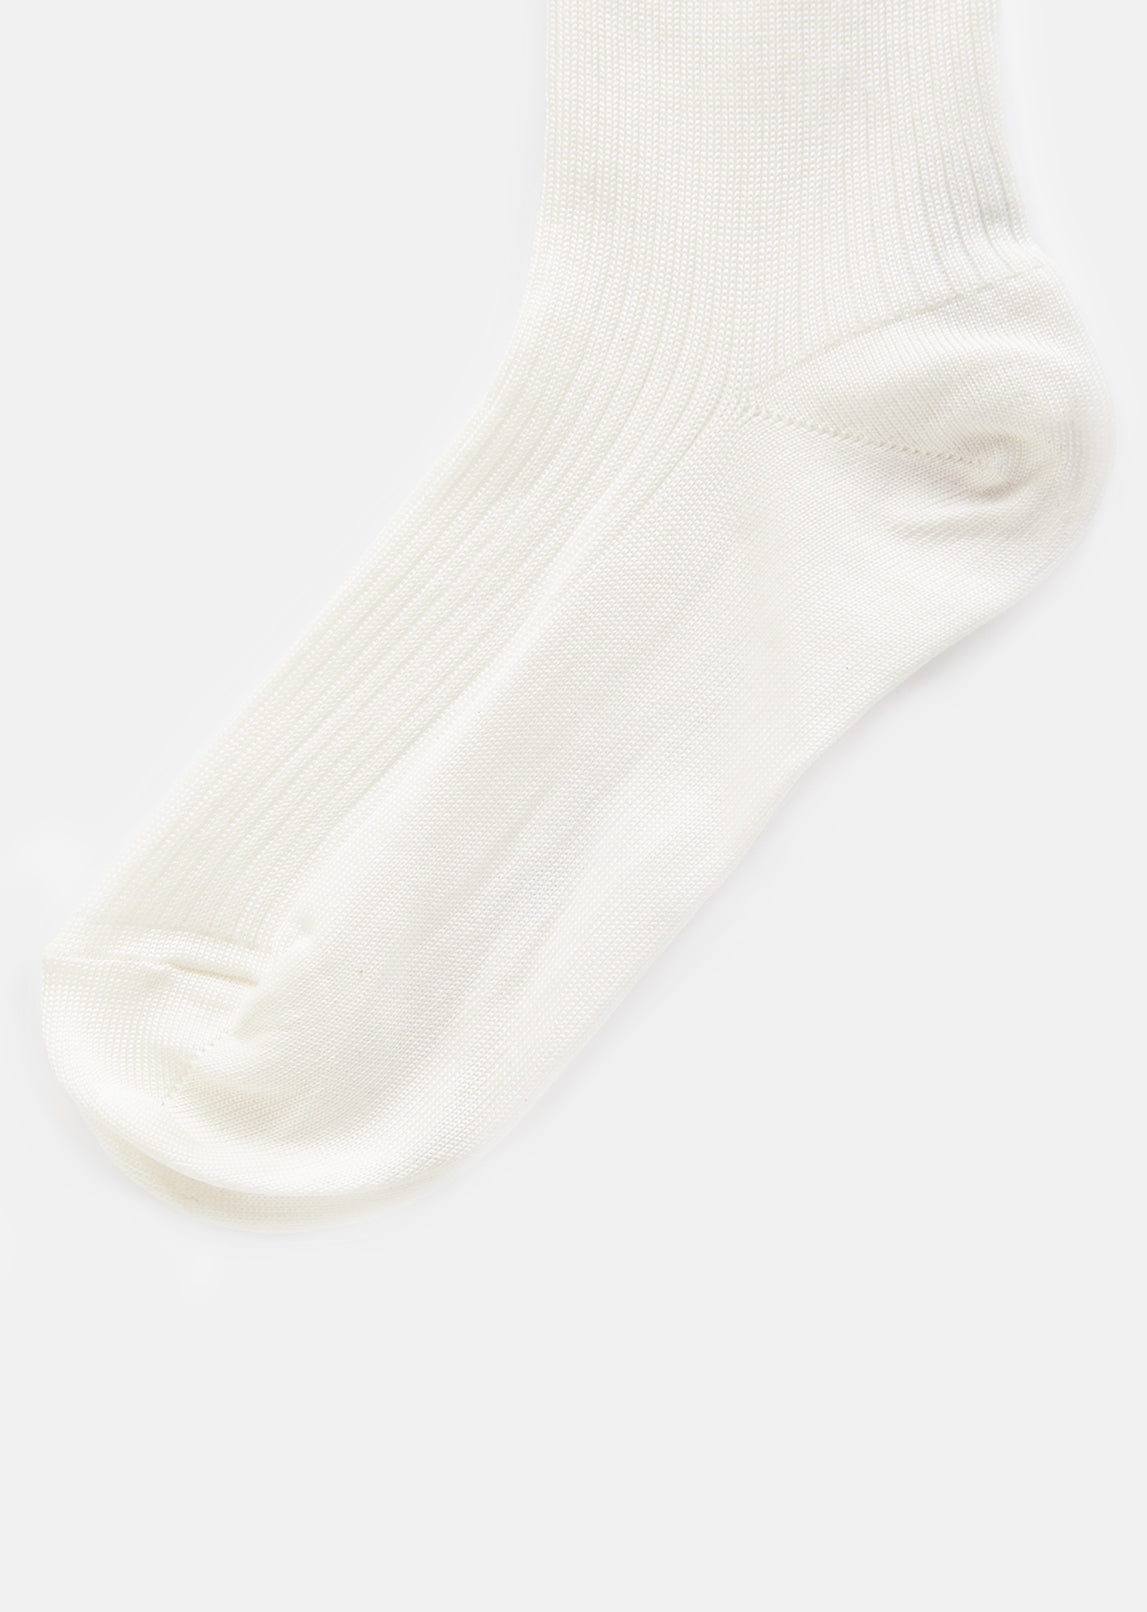 Short Rib Socks by Comme des Garçons- La Garçonne